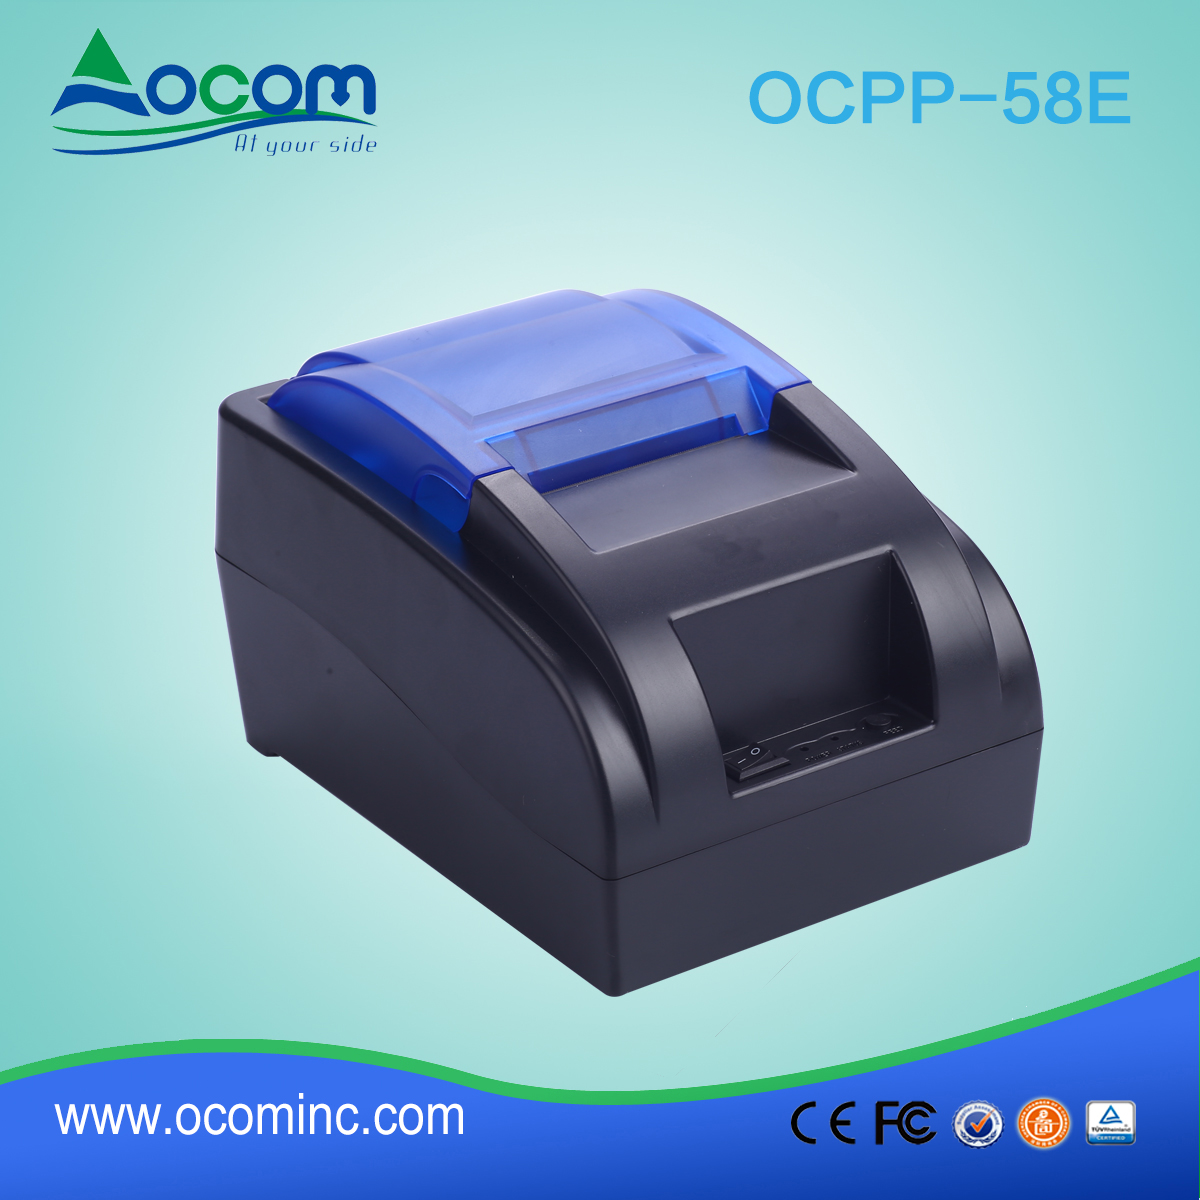 OCPP -58E OCOM 58 mm QR-Code Restaurantrechnungsbeleg pos Thermodrucker